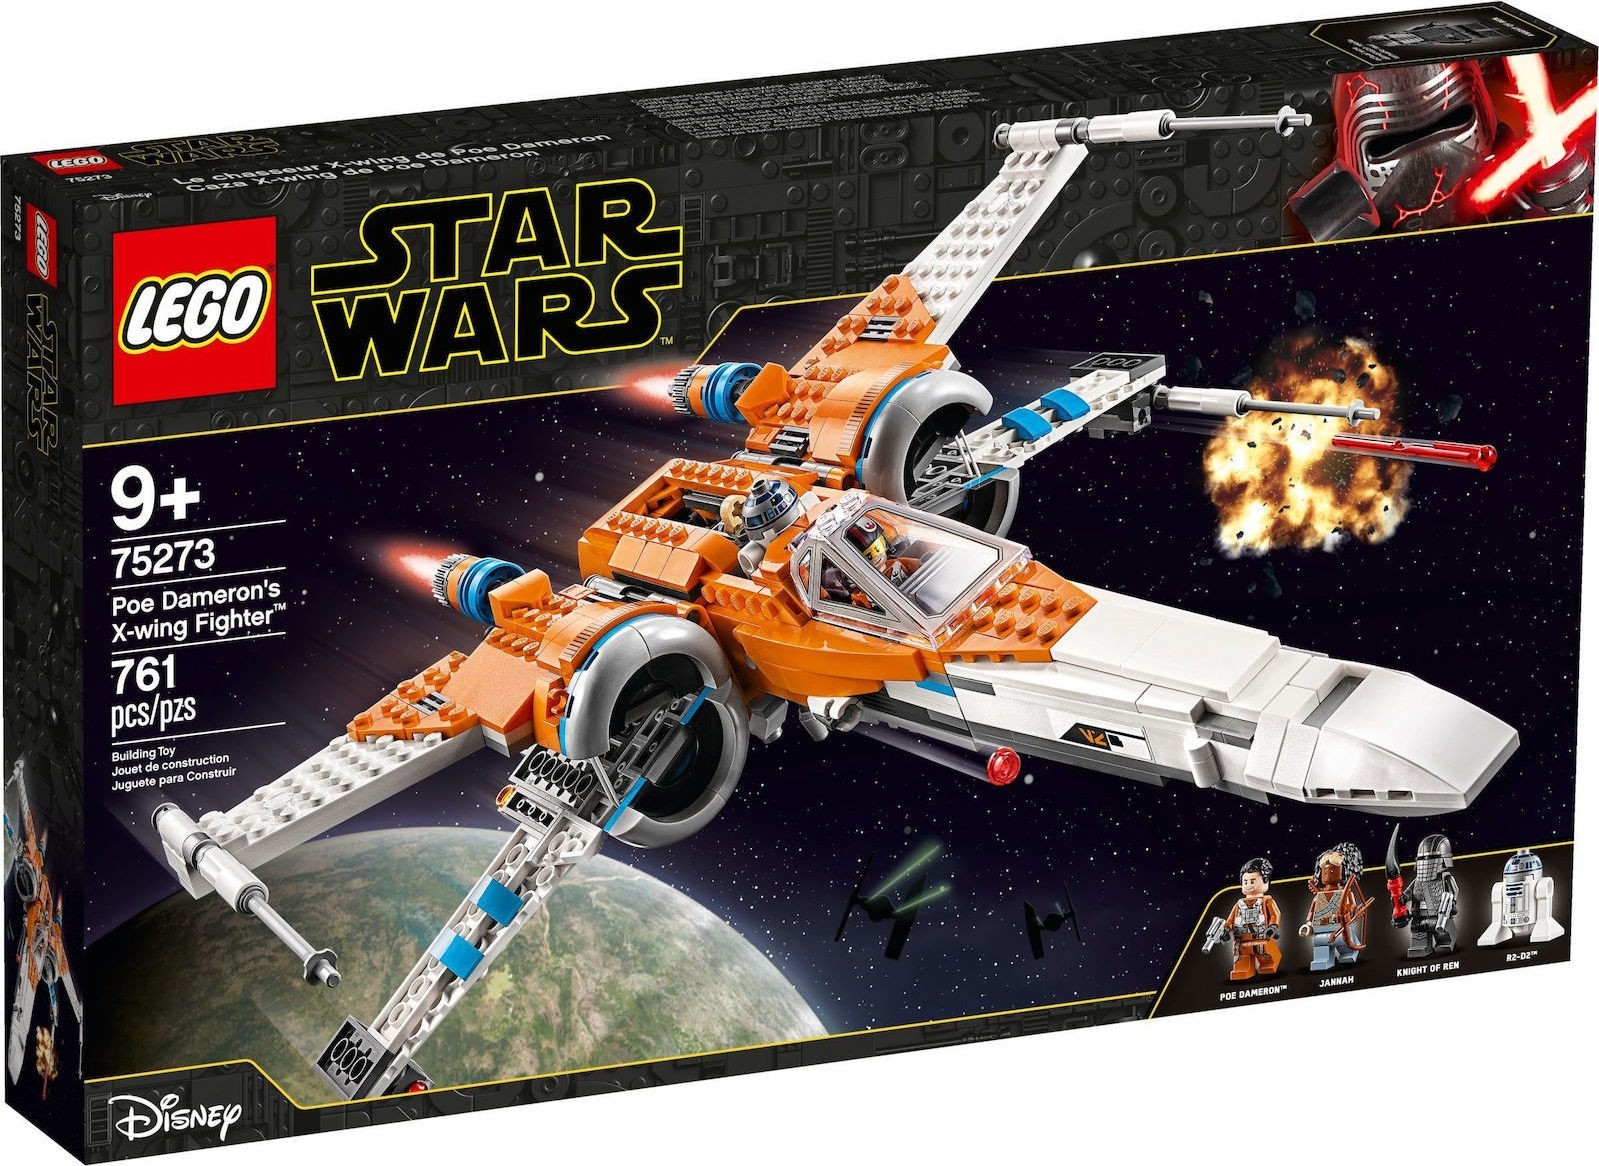 Lego Star Wars: Poe Dameron's X-wing Fighter 75273